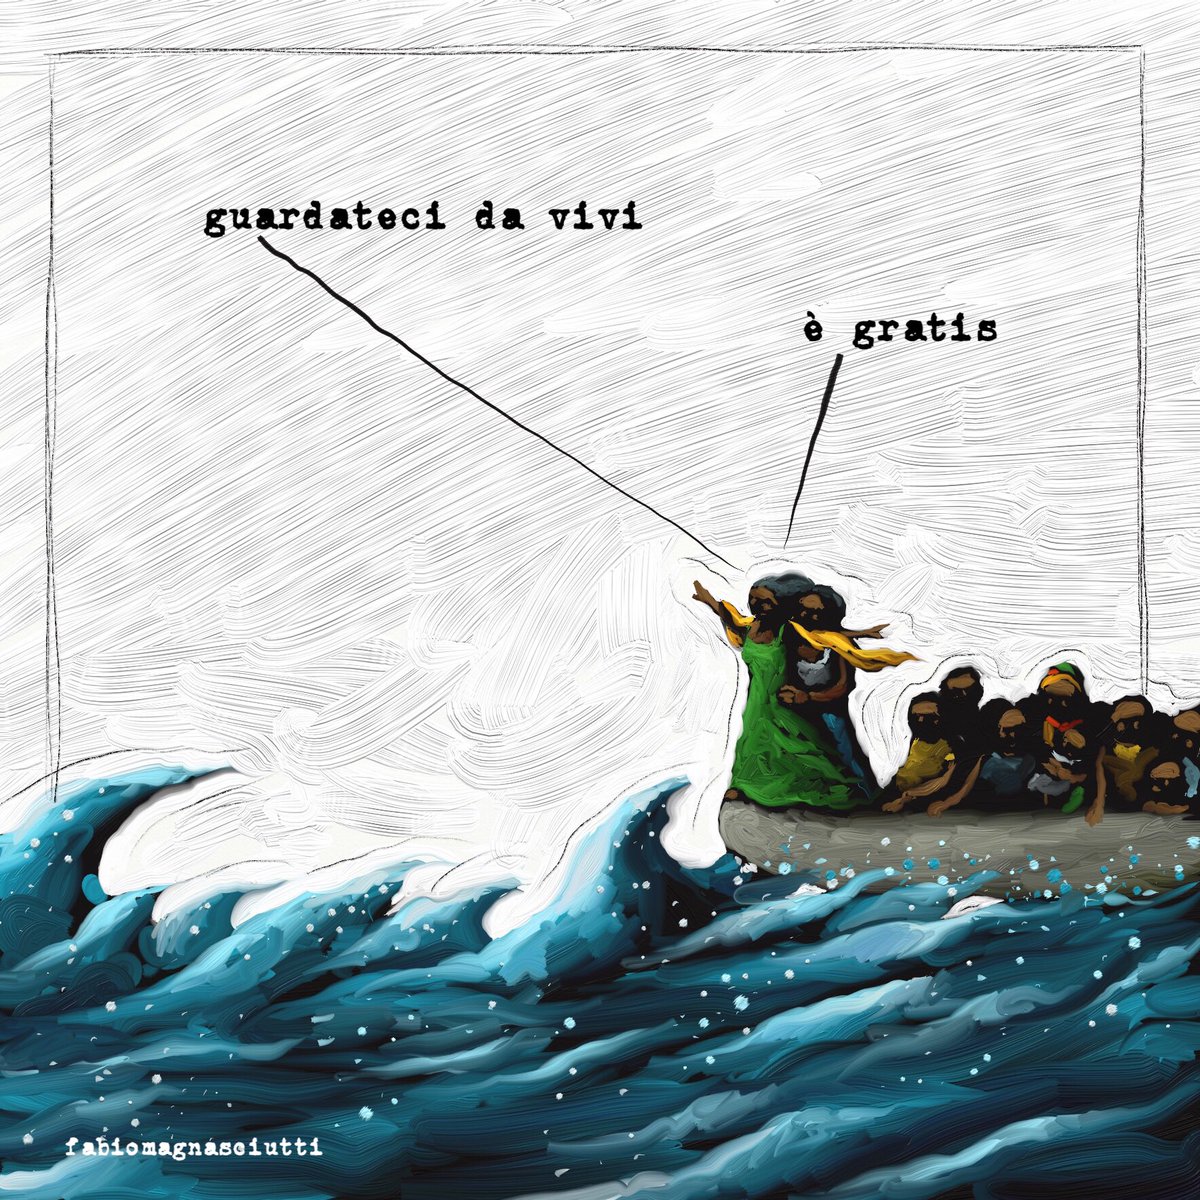 it was sad when the little ship went down
#GiornataMondialedelRifugiato 
#Titanic